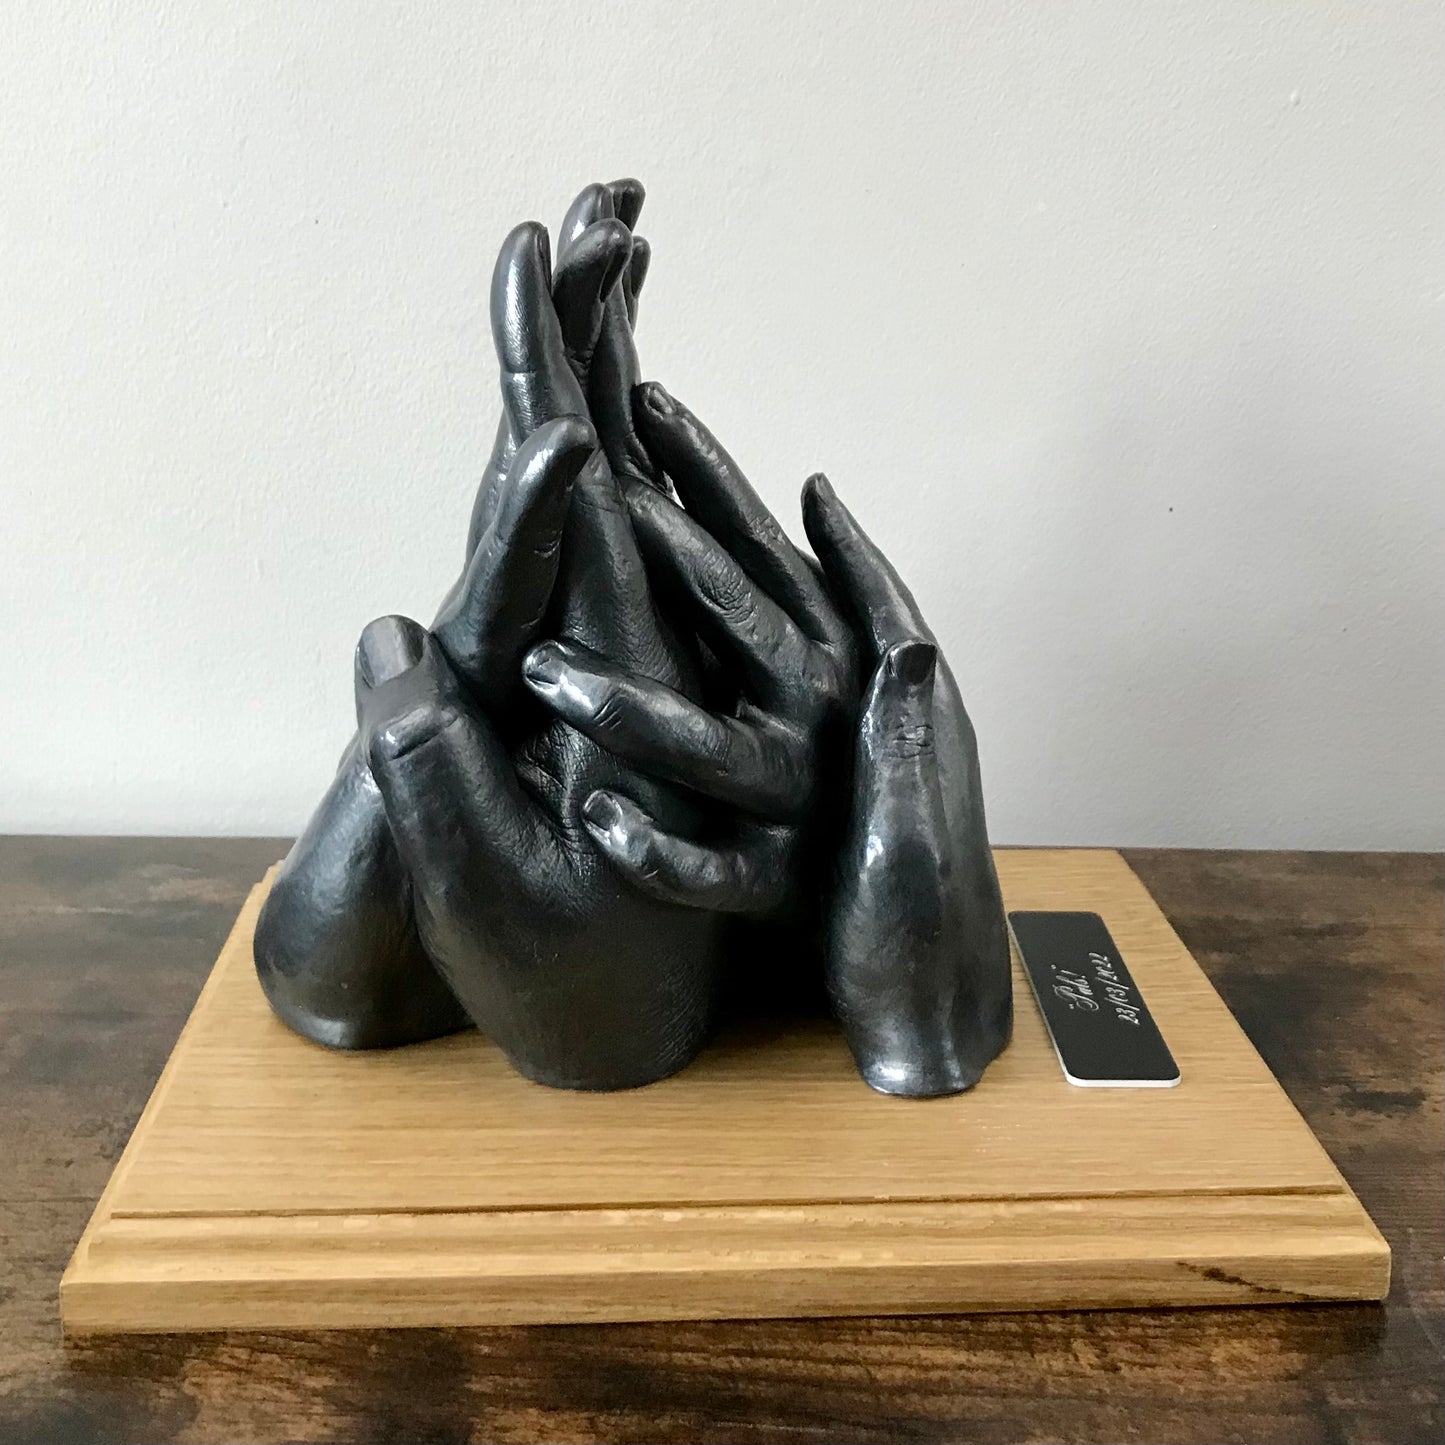 Freestanding 4 Person Handclasp Sculpture